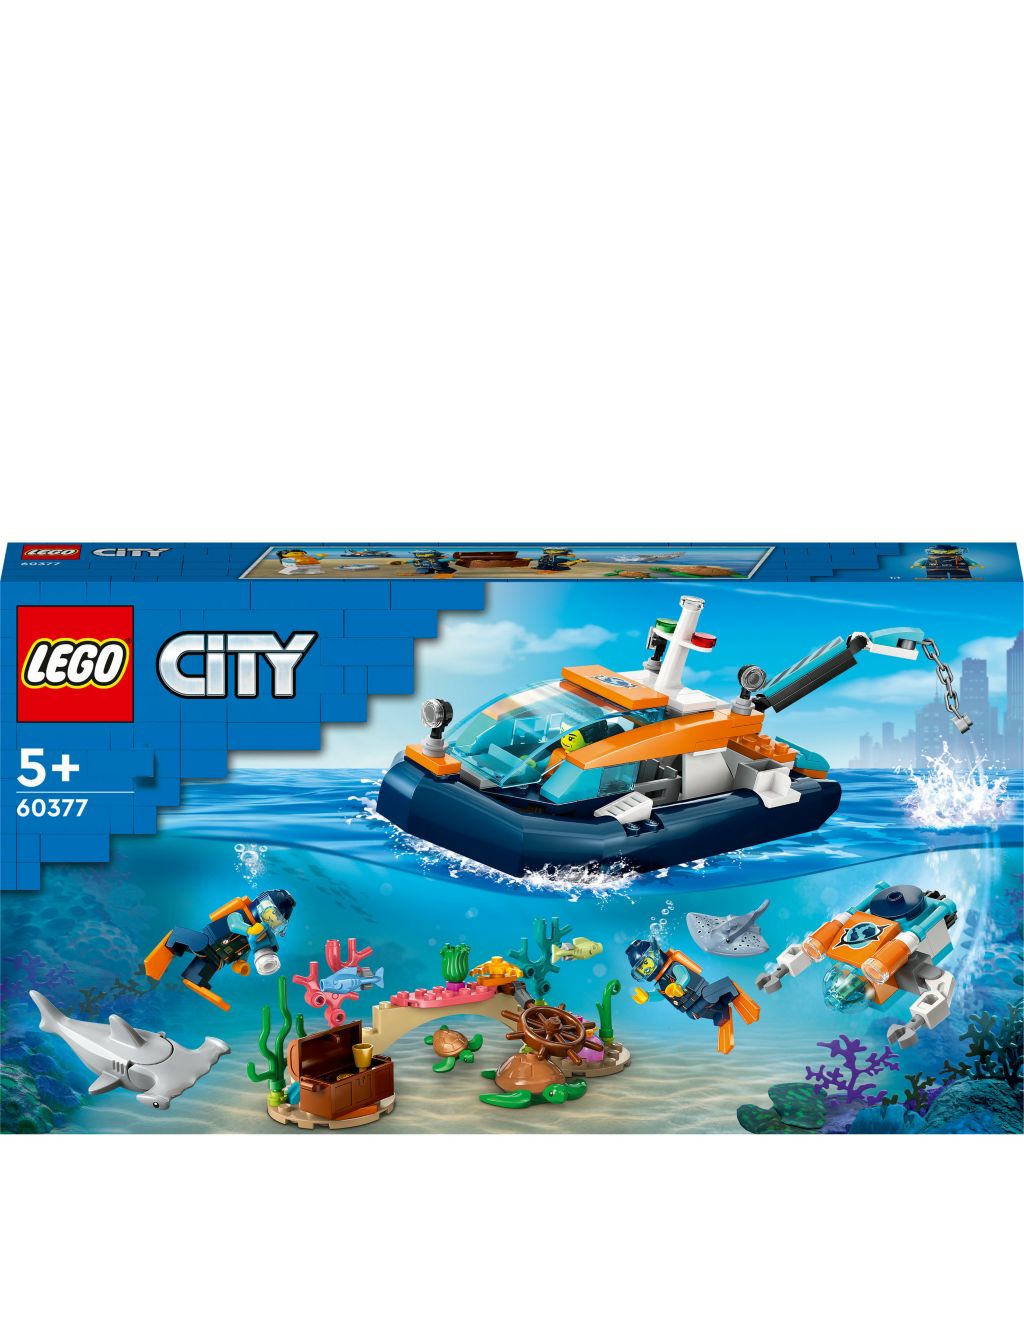 LEGO City Explorer Diving Boat Toy Ocean Set (5+ Yrs) image 3